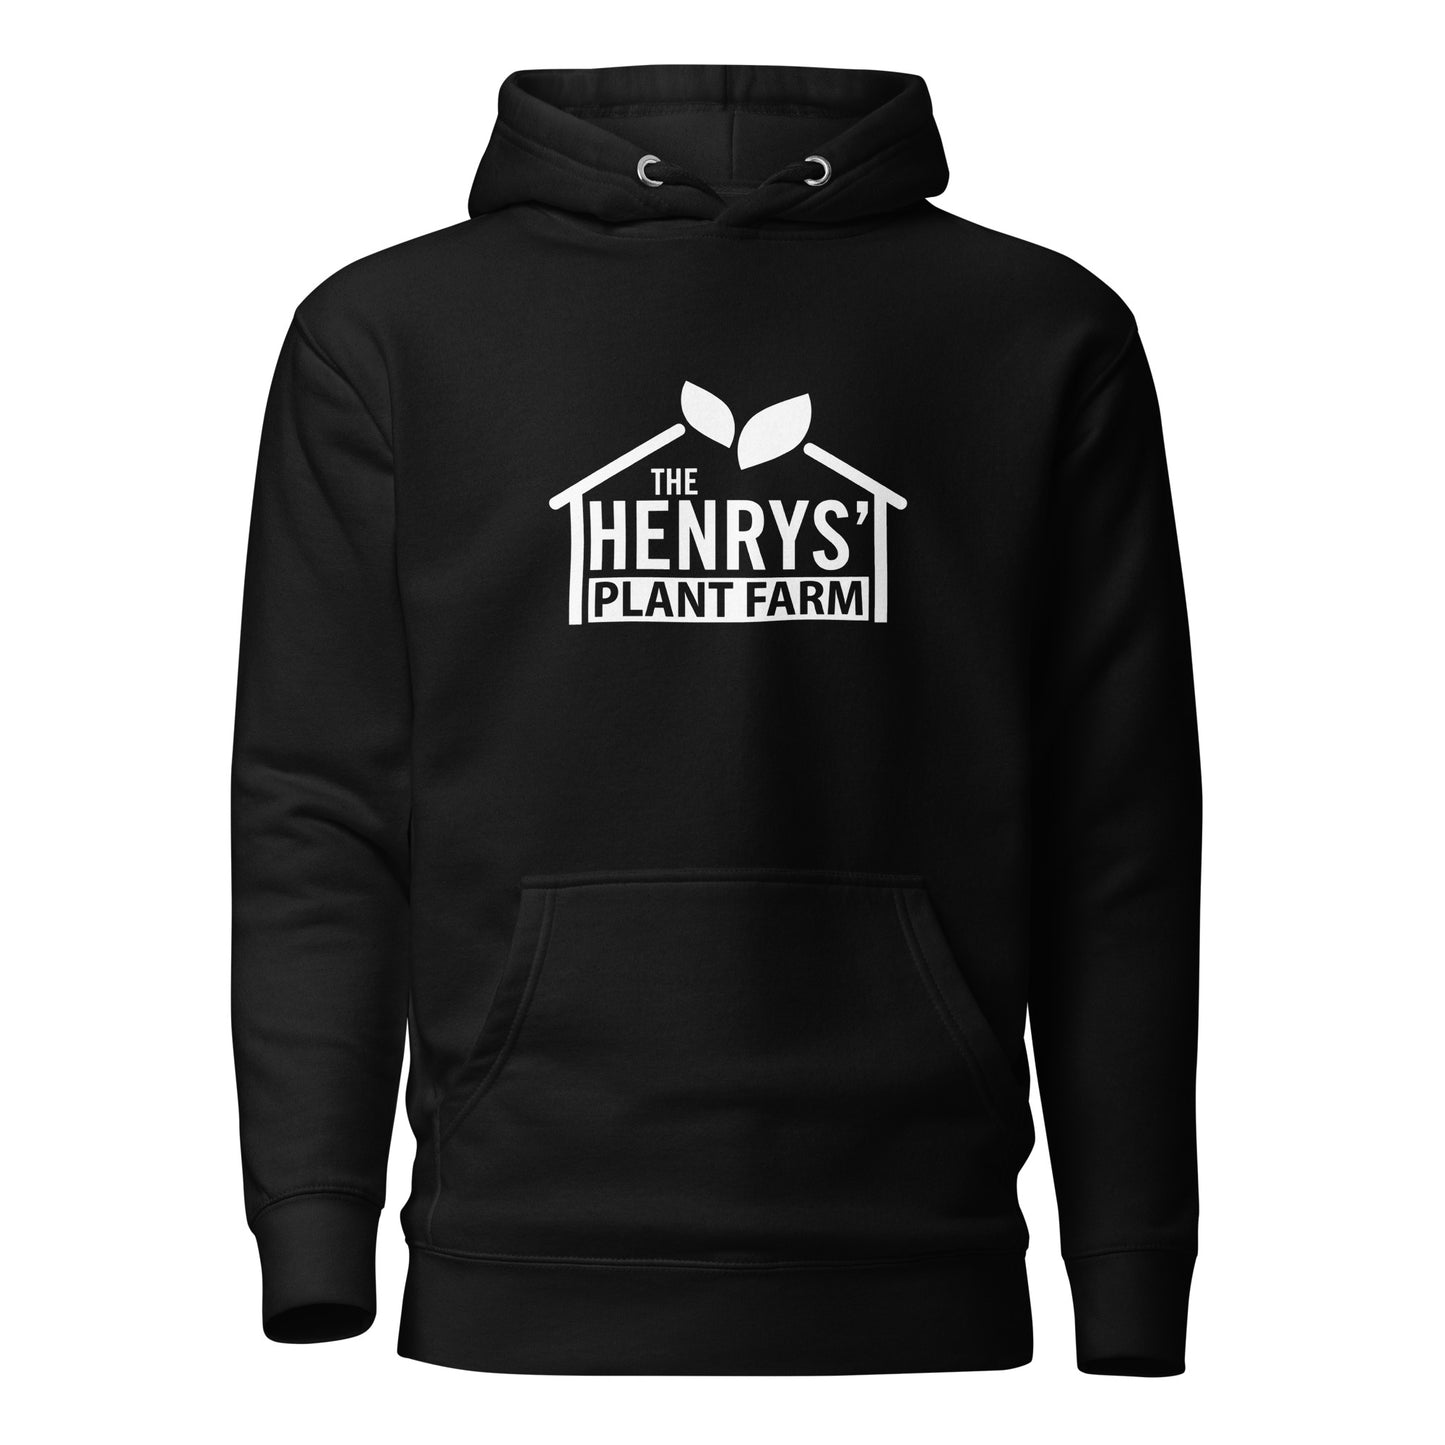 The Henrys' Plant Farm - Unisex Heavyweight Hoodie